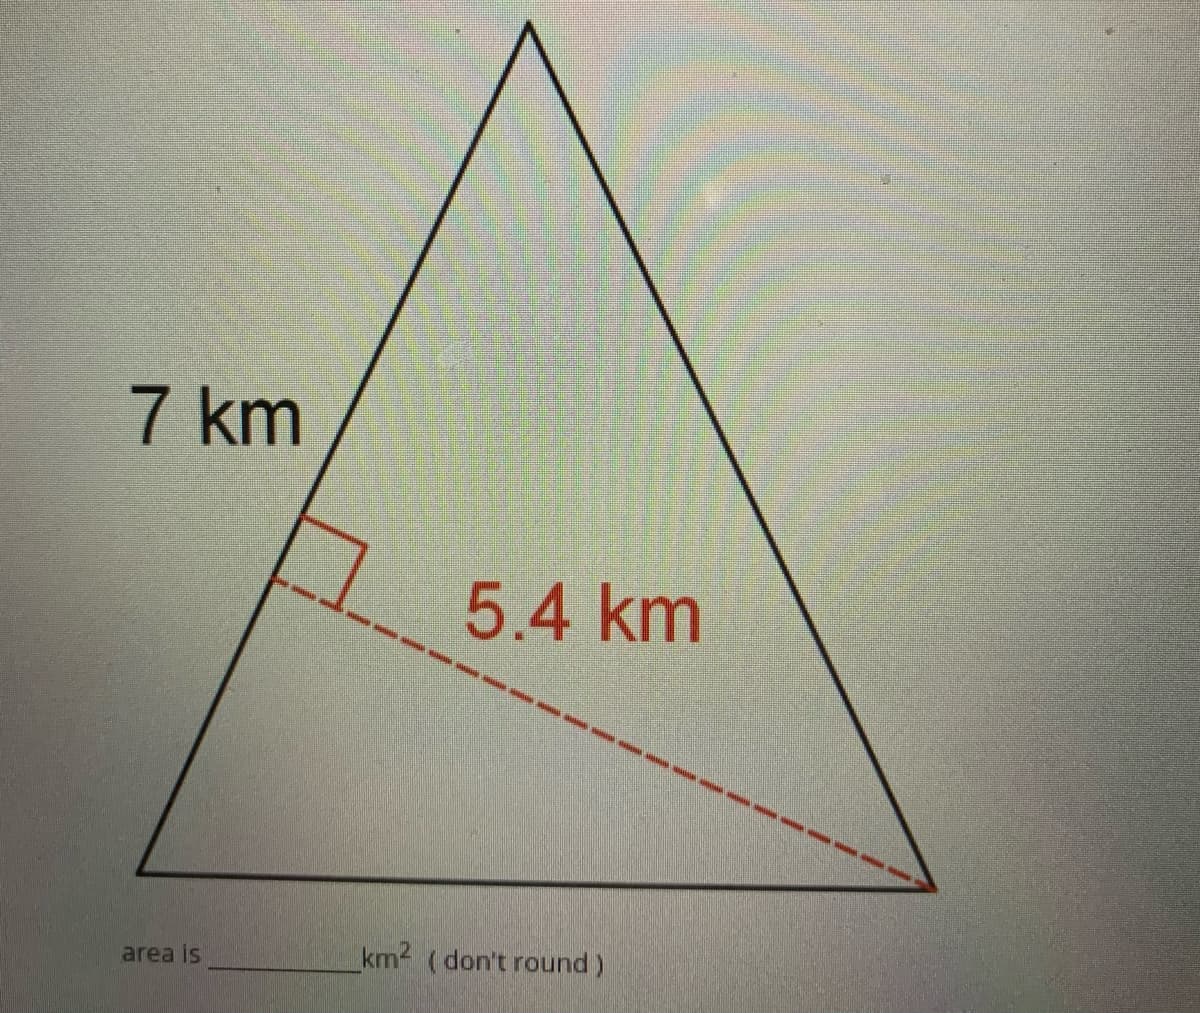 7 km
5.4 km
area is
km2 (don't round)
